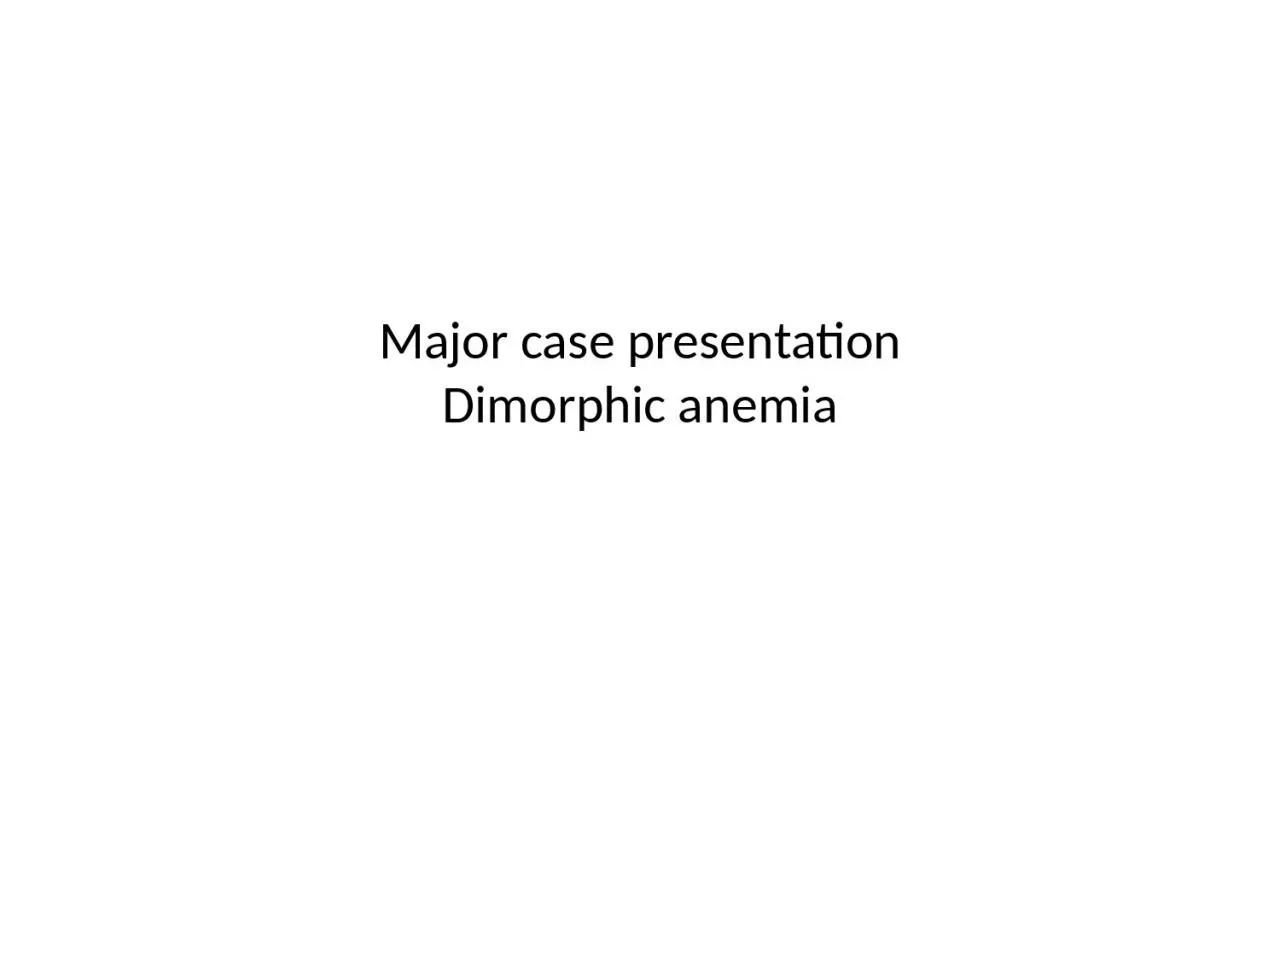 Major case presentation Dimorphic anemia